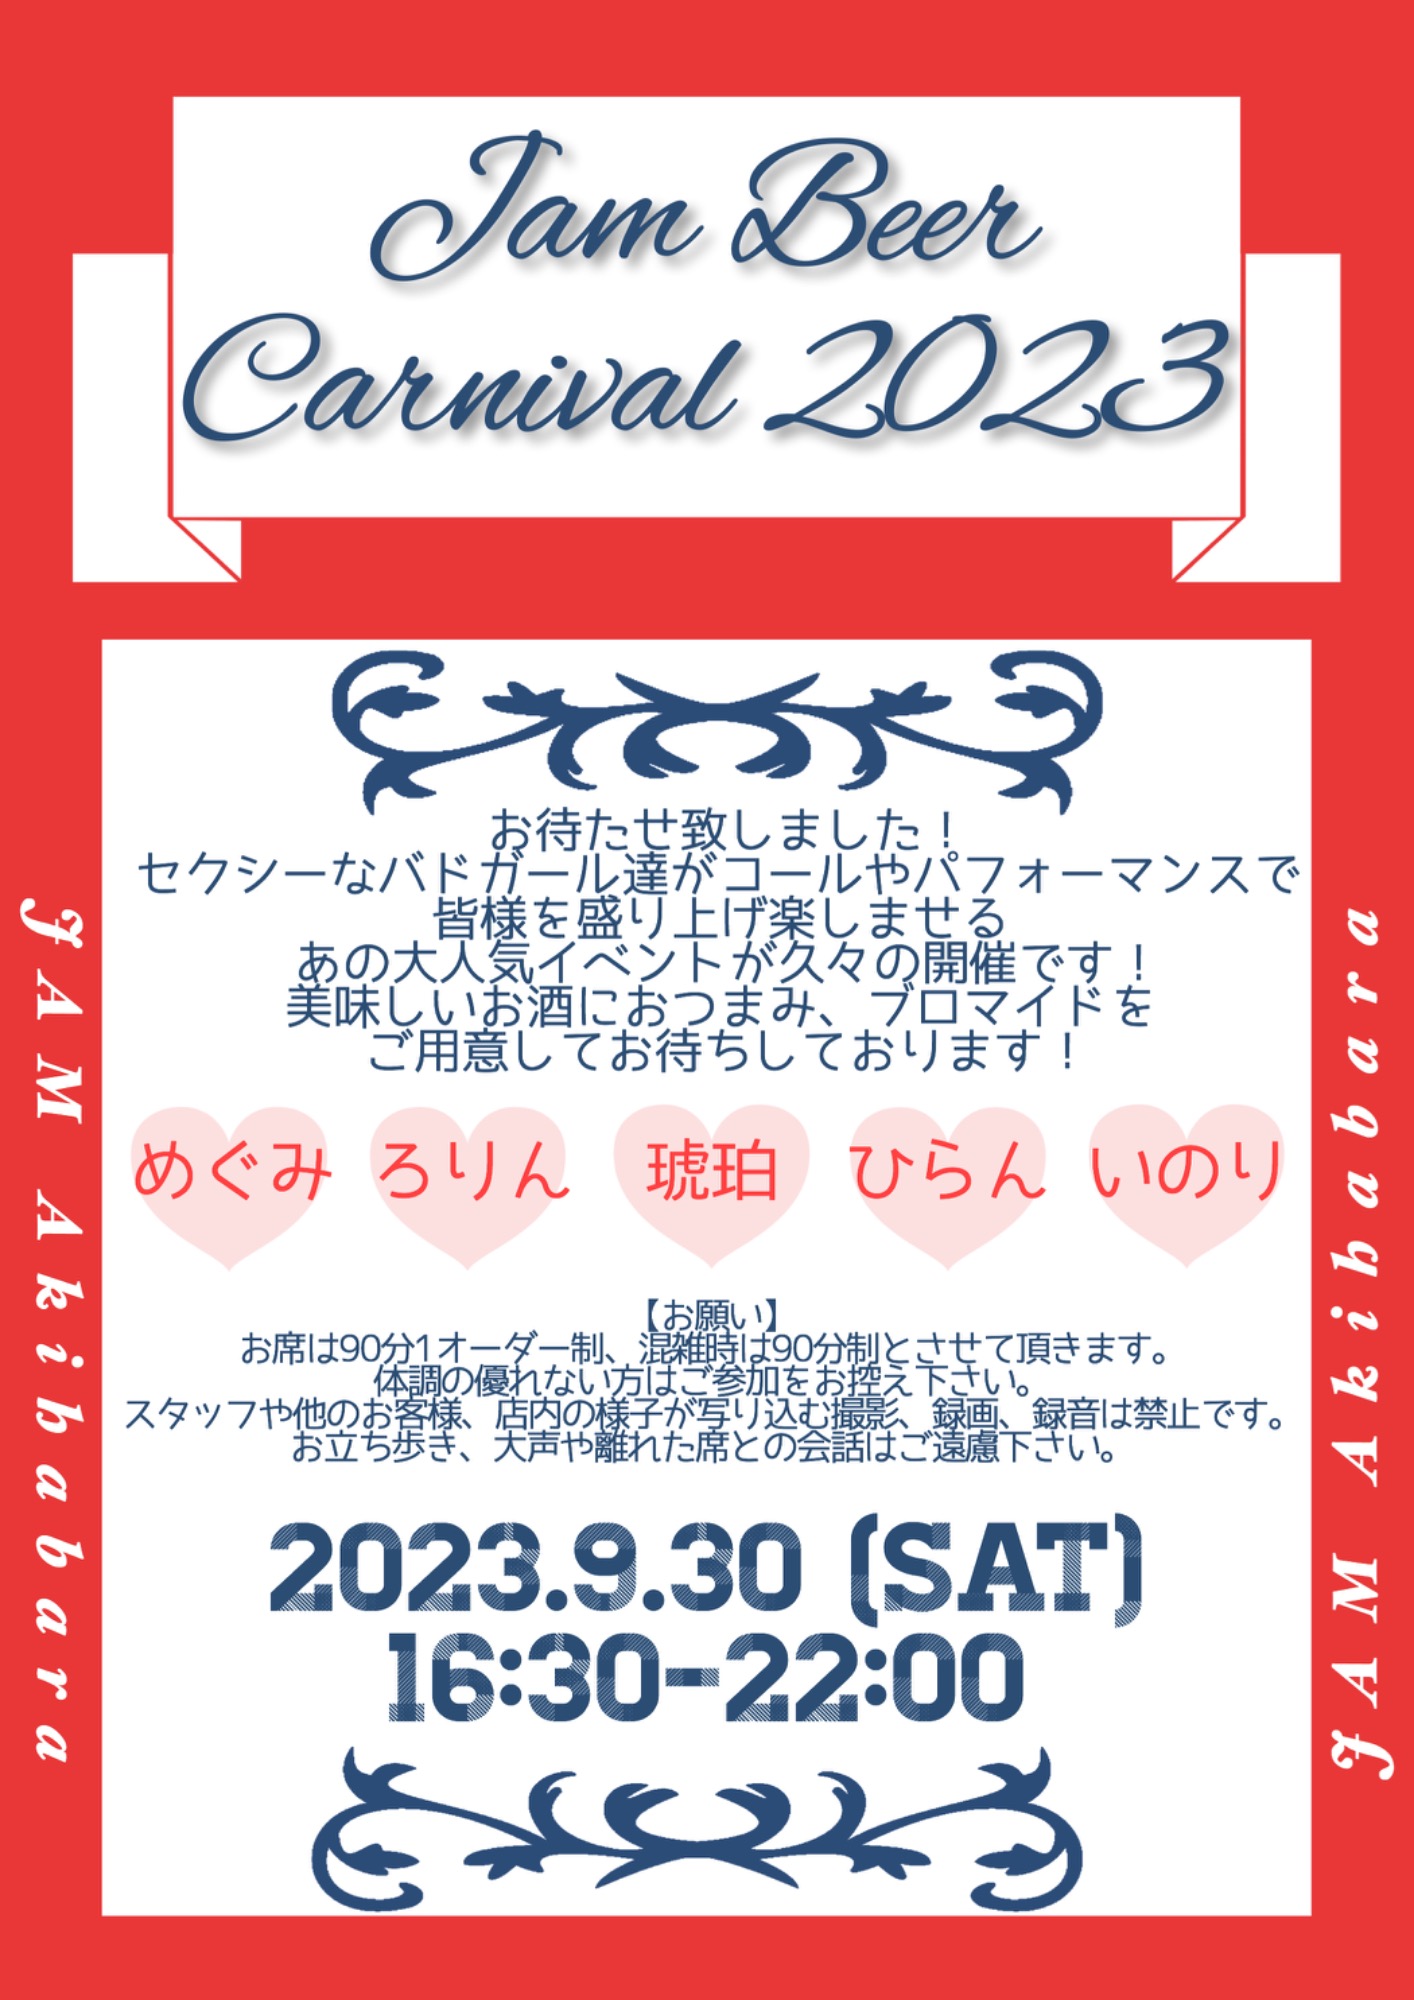 Jam Beer Carnival 2023